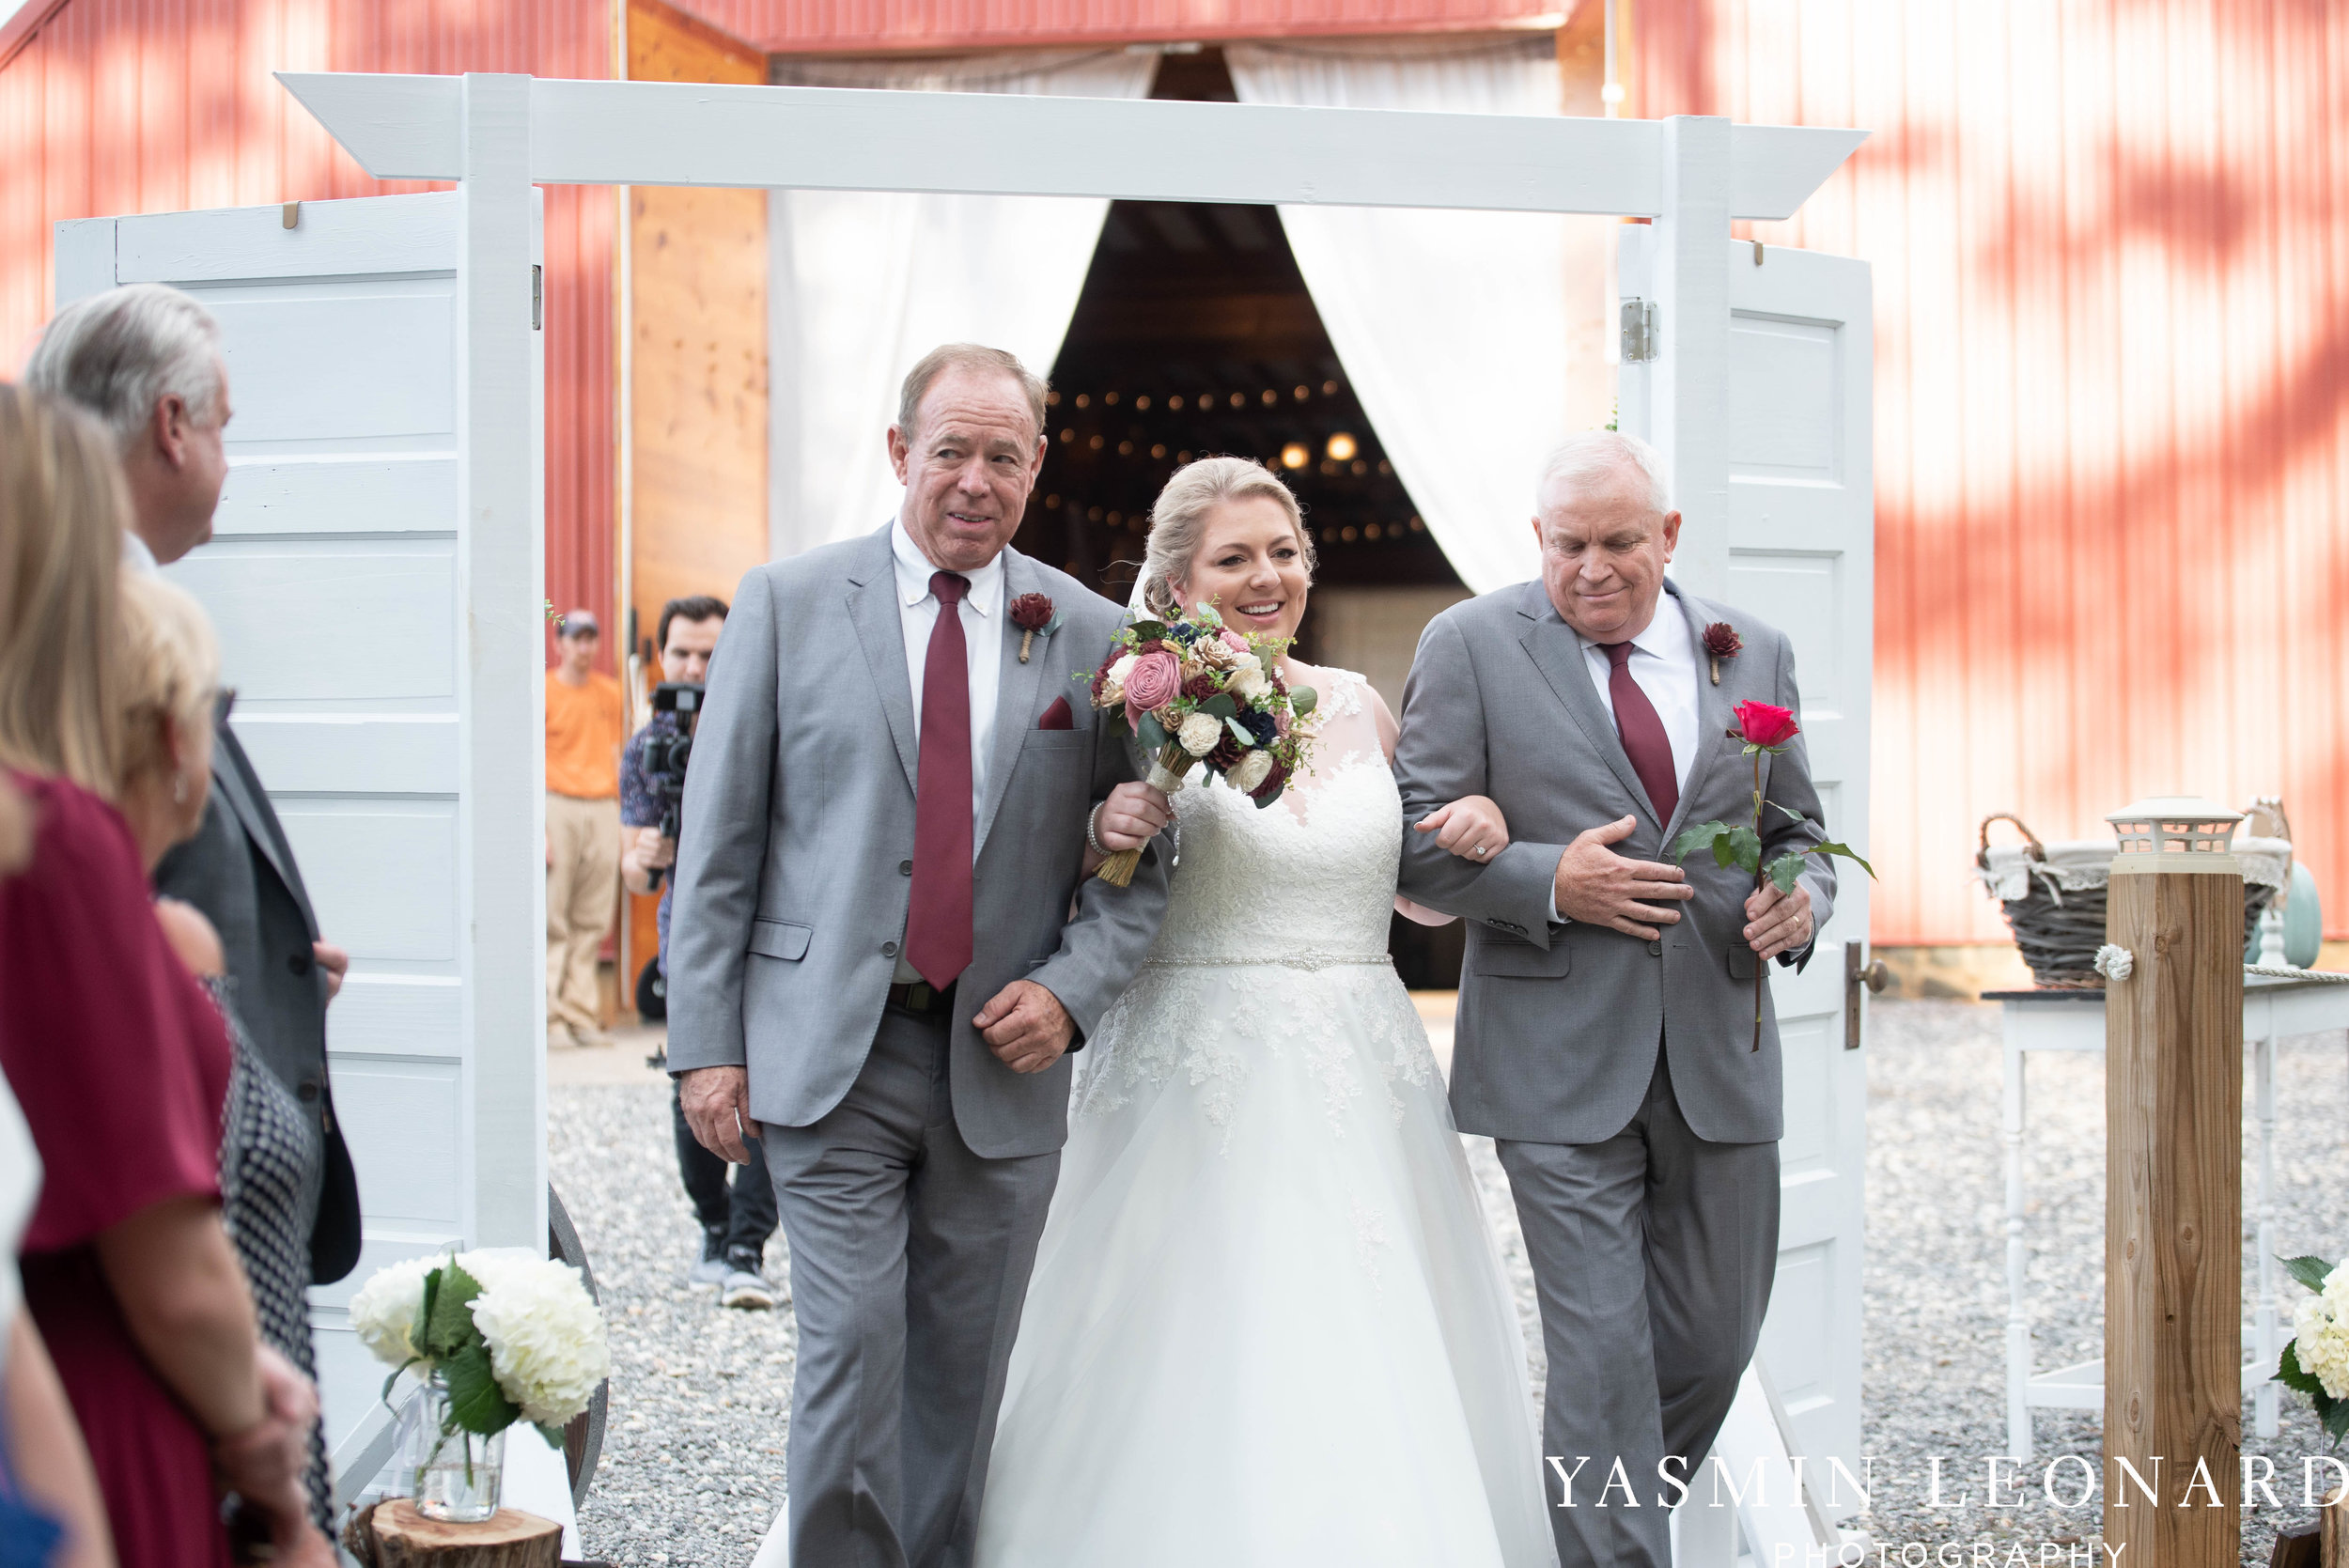 Danner Farms - NC Wedding Venues - NC Barns - Statesville NC - NC Wedding Photographer - High Point Wedding Photographer - Yasmin Leonard Photography-29.jpg